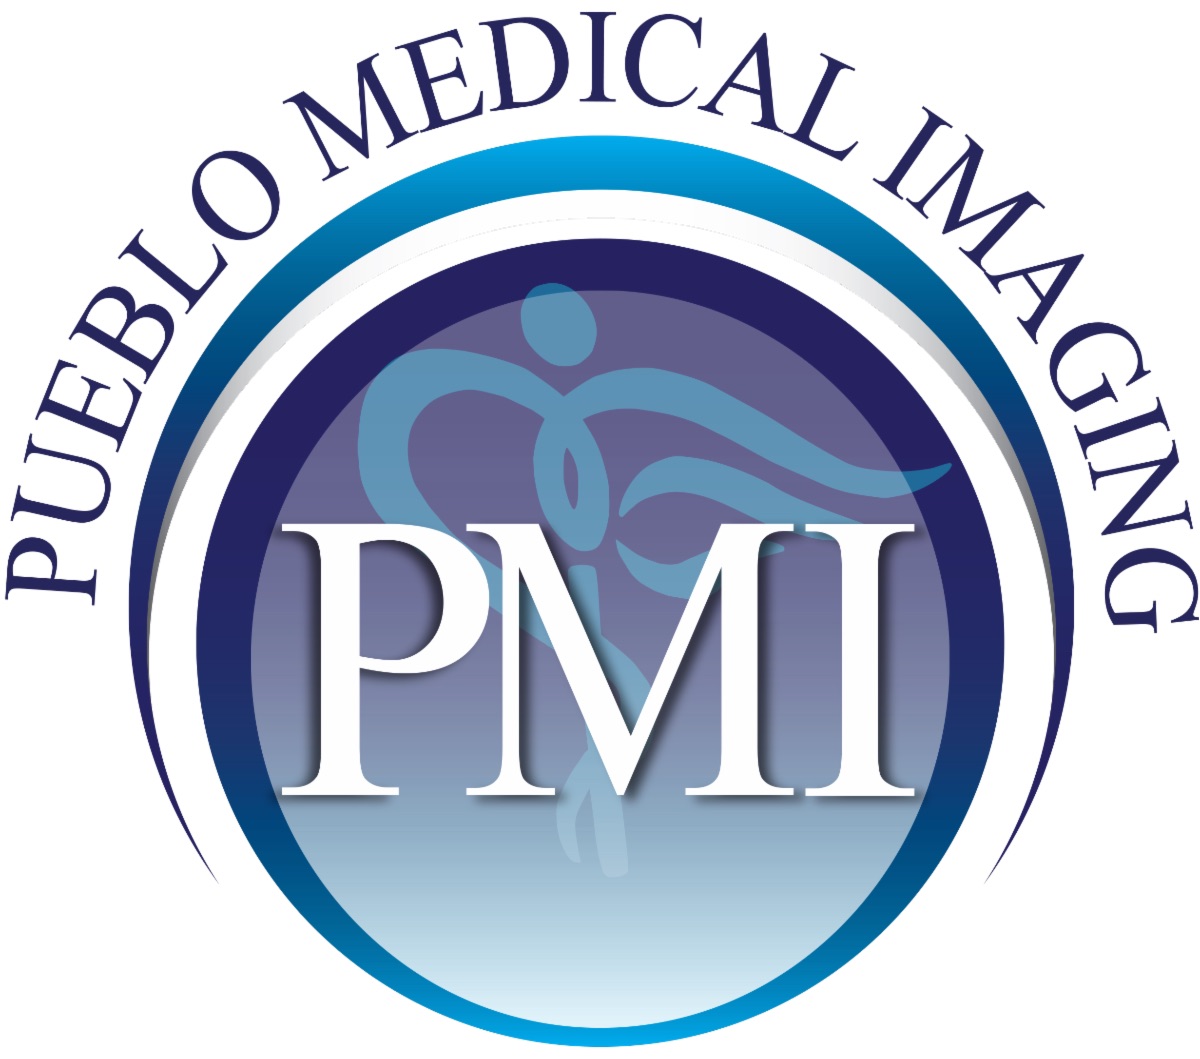 Pueblo Medical Imaging logo